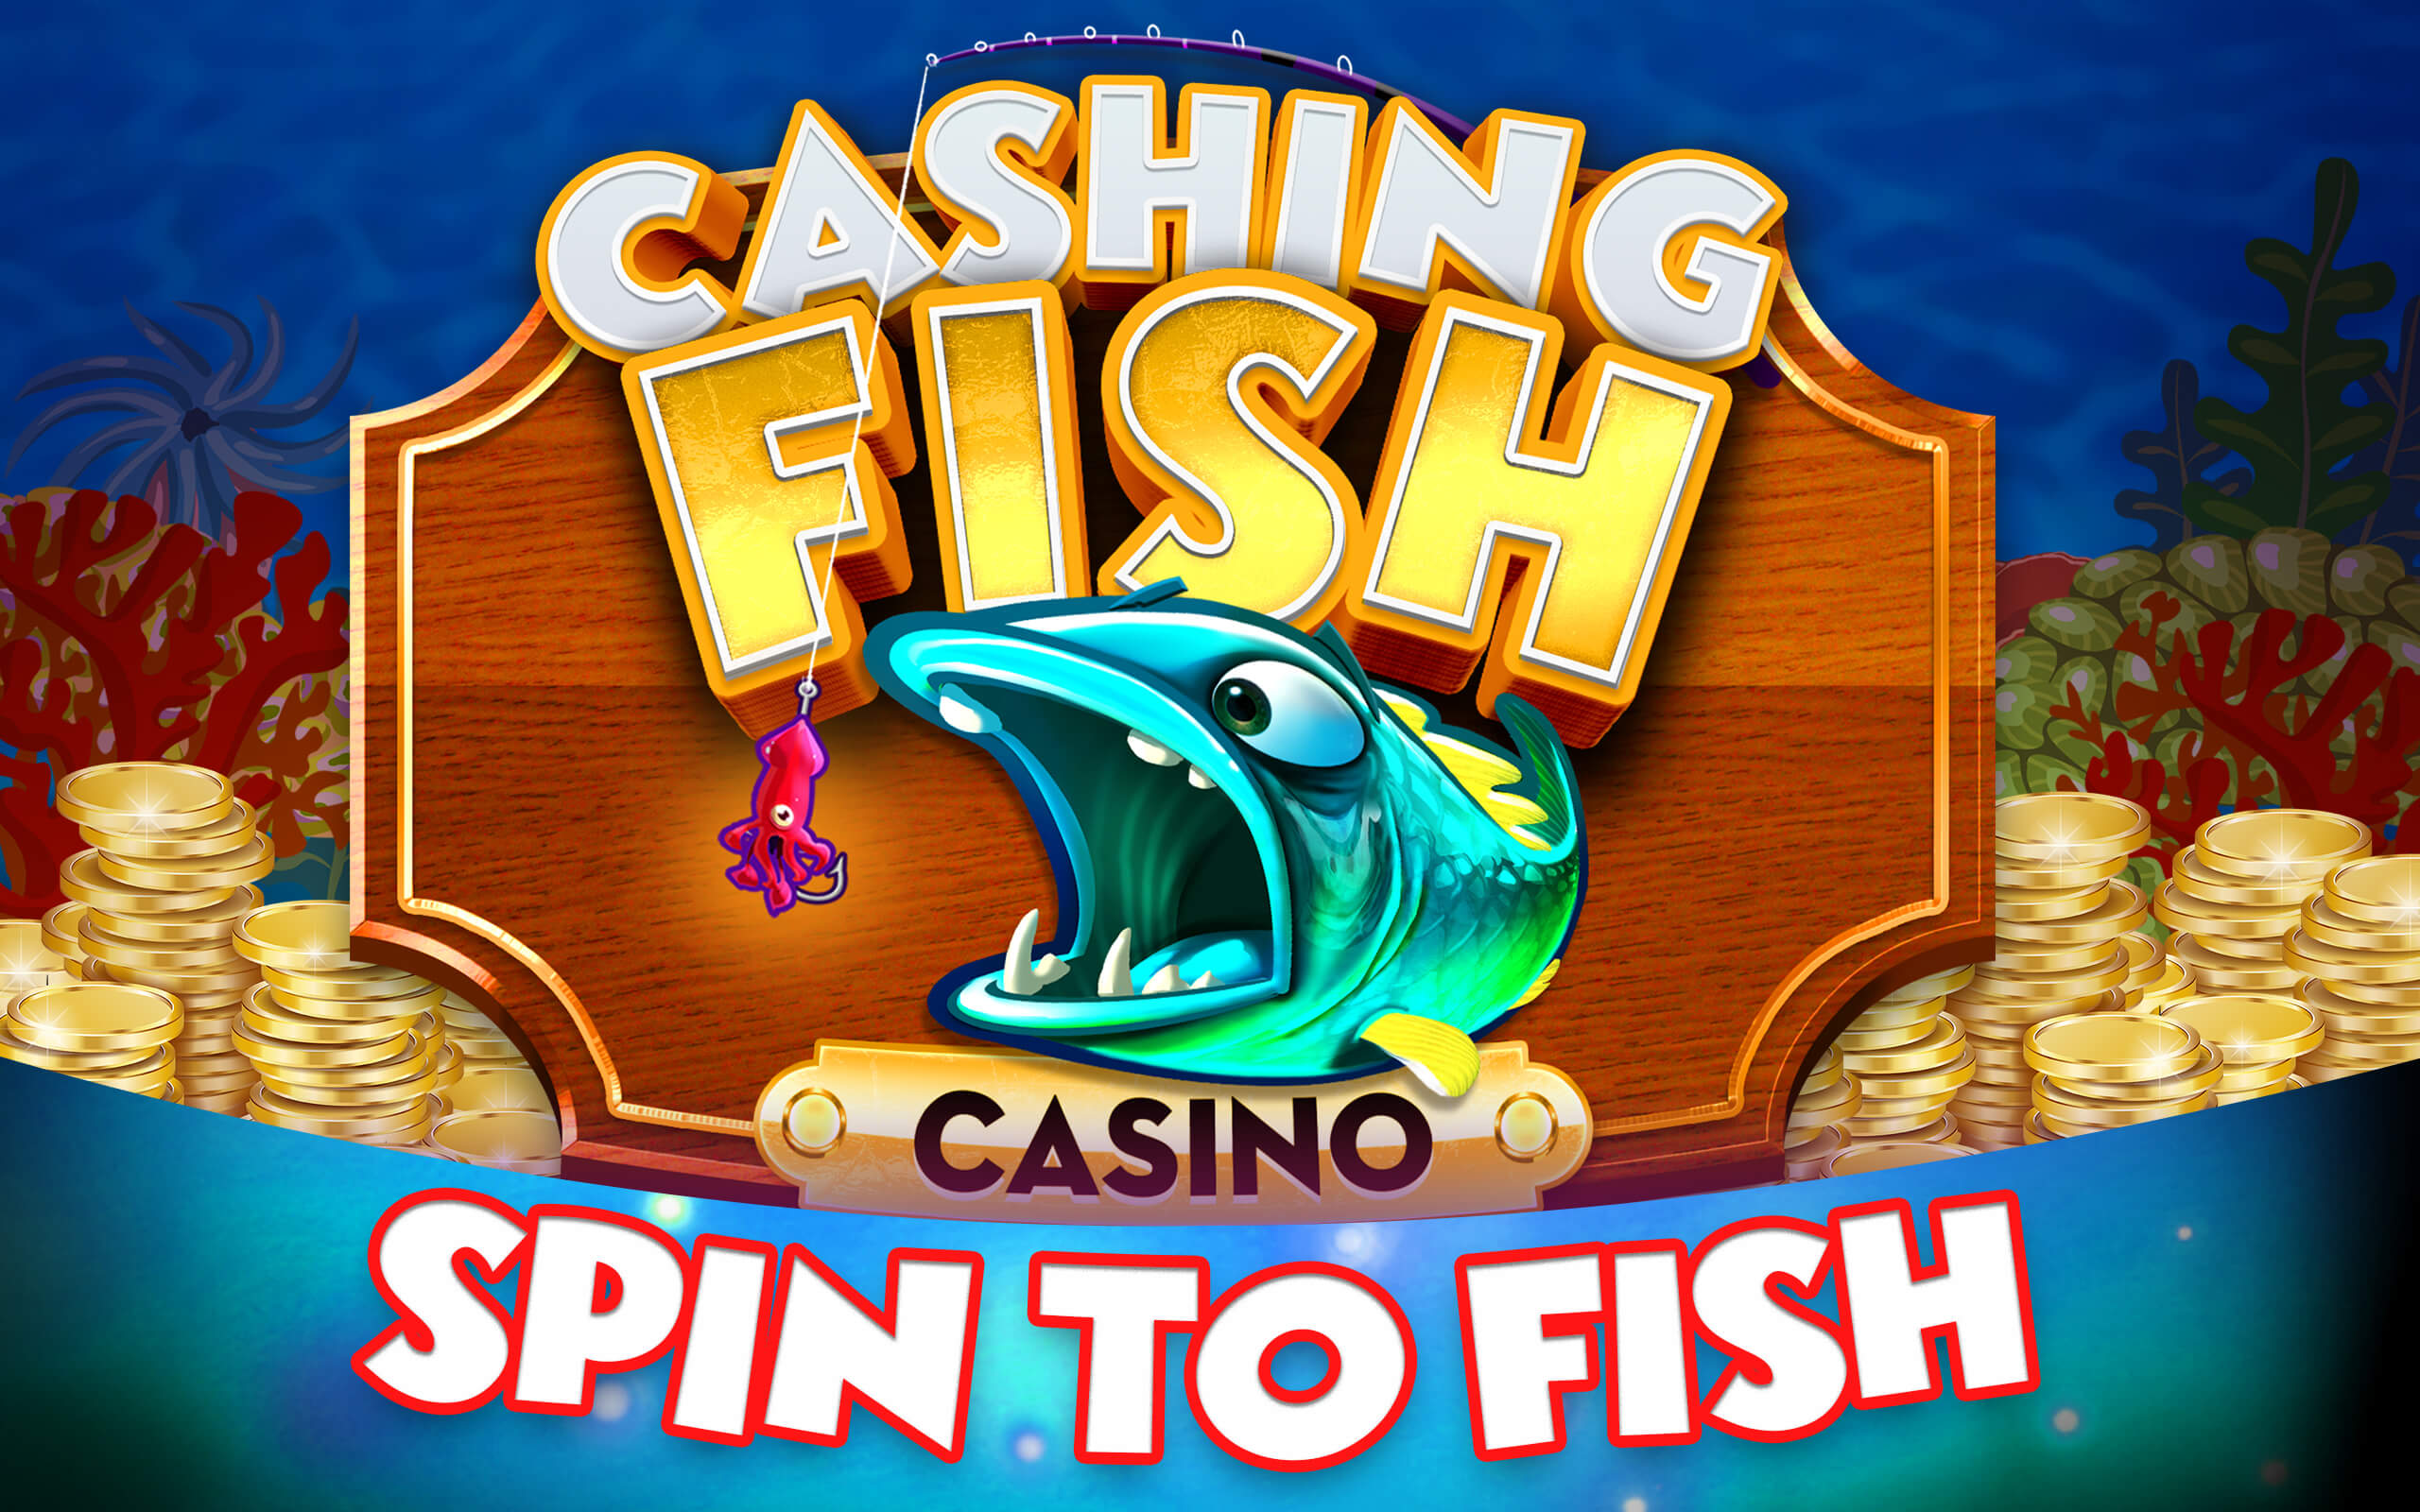 Online casino fish game free play